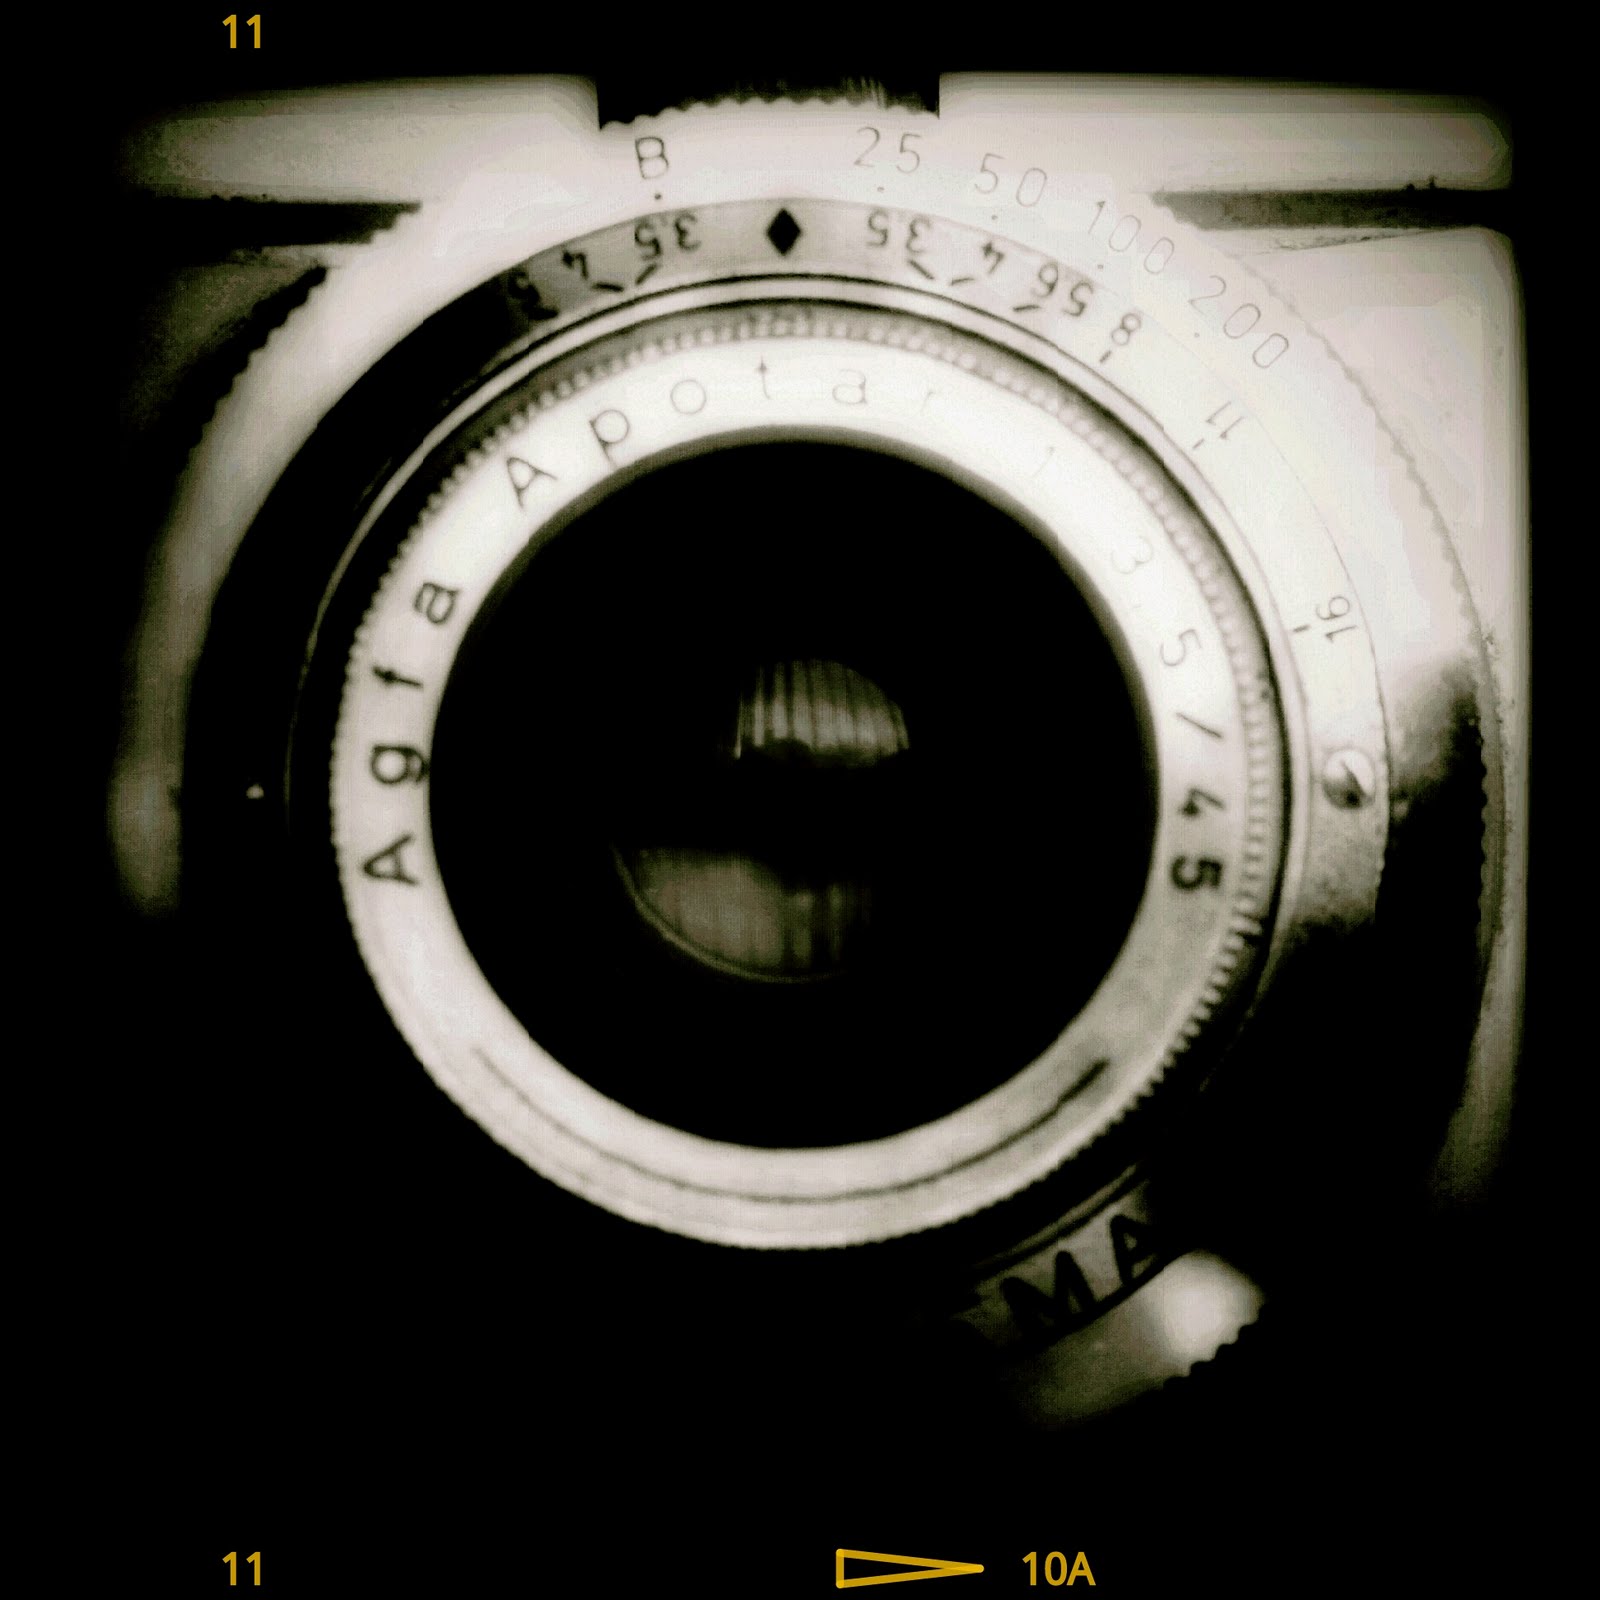 Photography Lenses